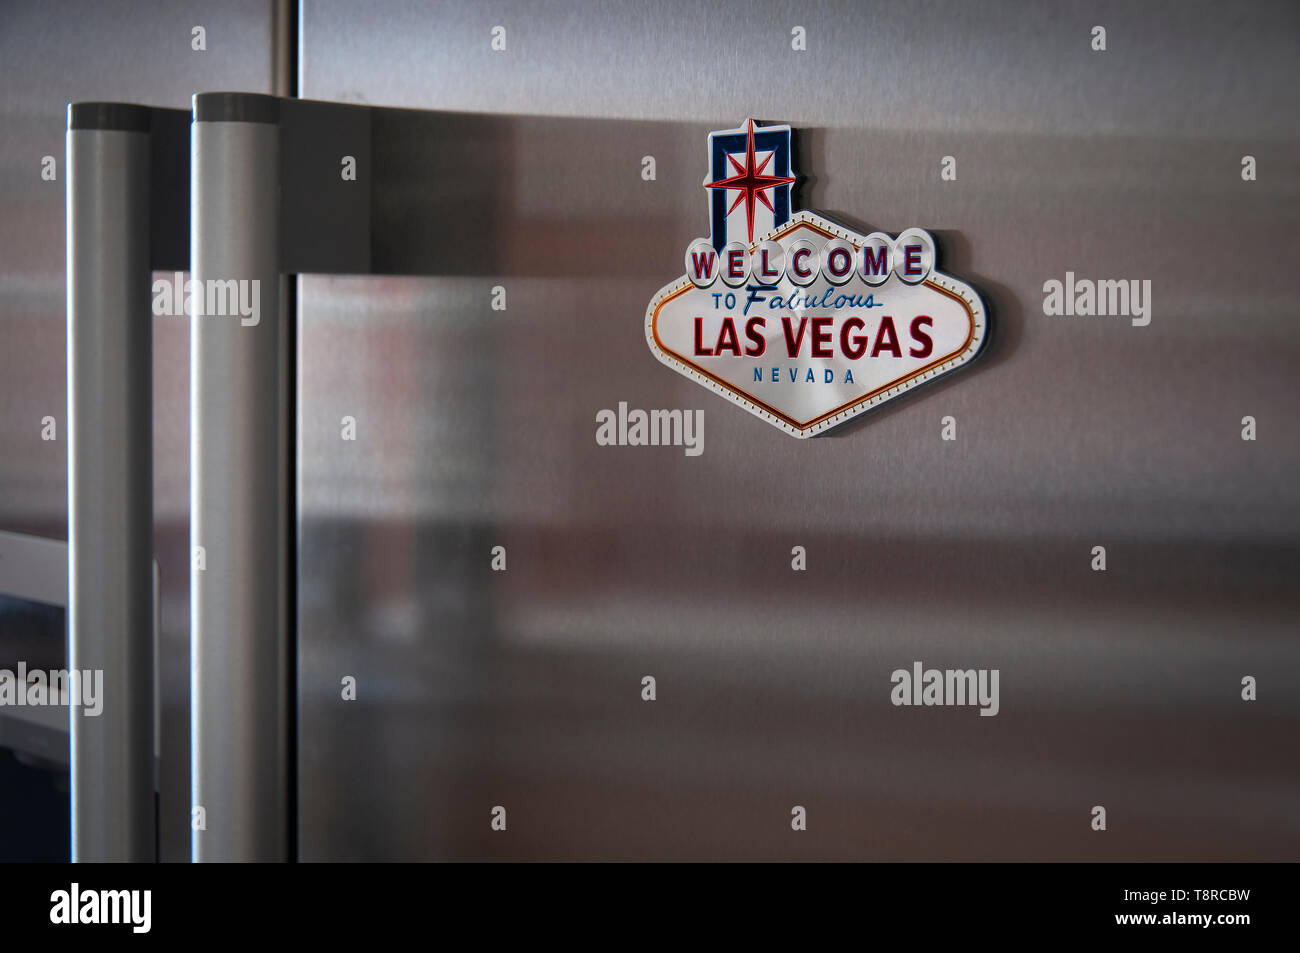 Las Vegas nevera imán acoplado a una moderna nevera de acero inoxidable Foto de stock